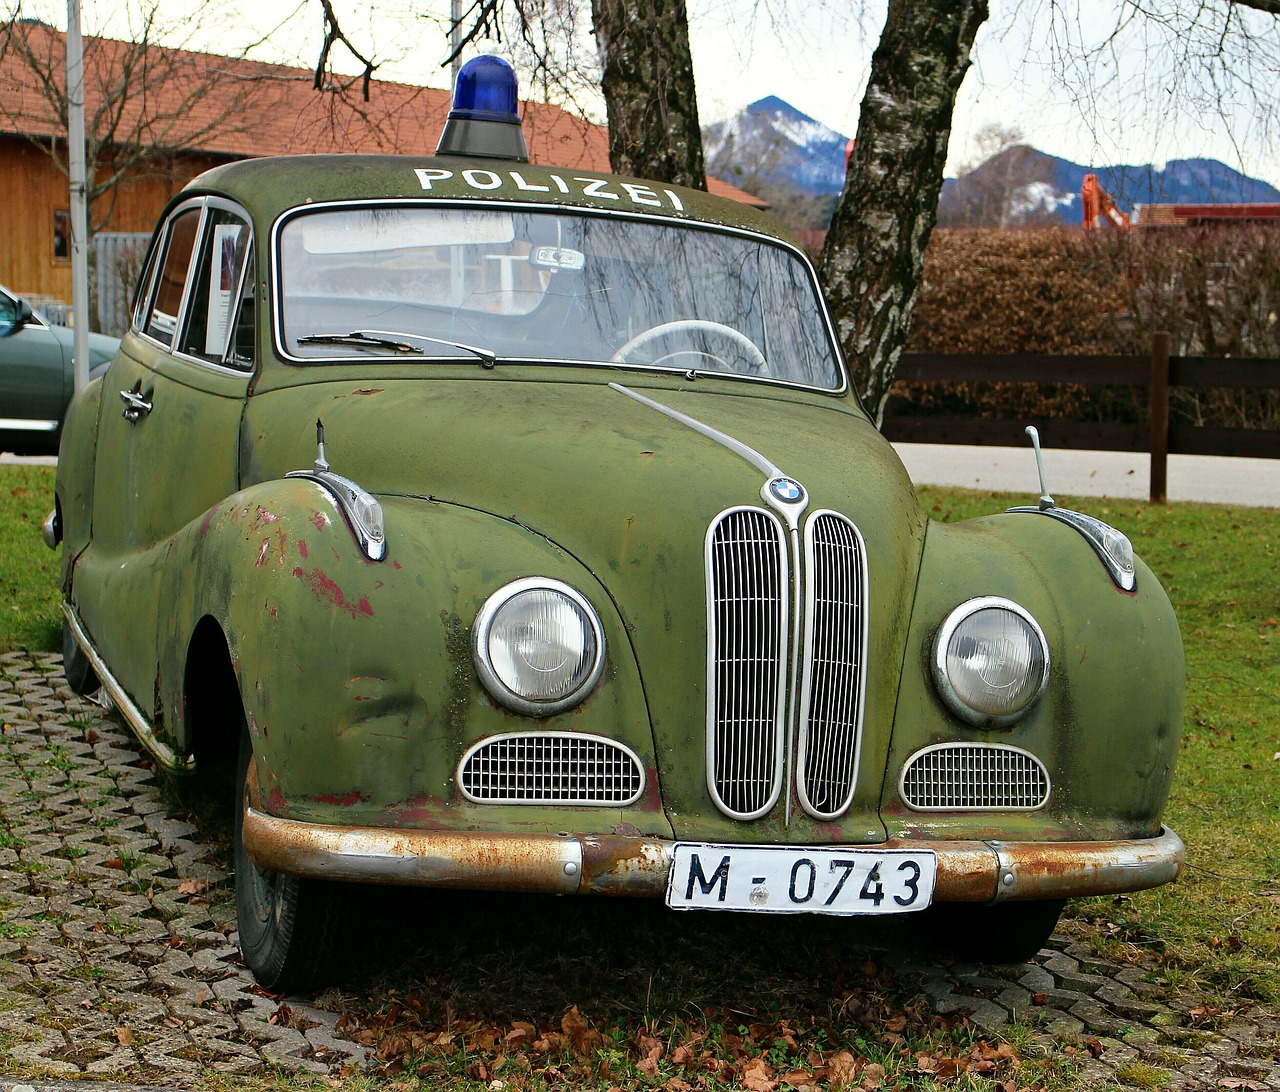 police car oldtimer movie car free photo